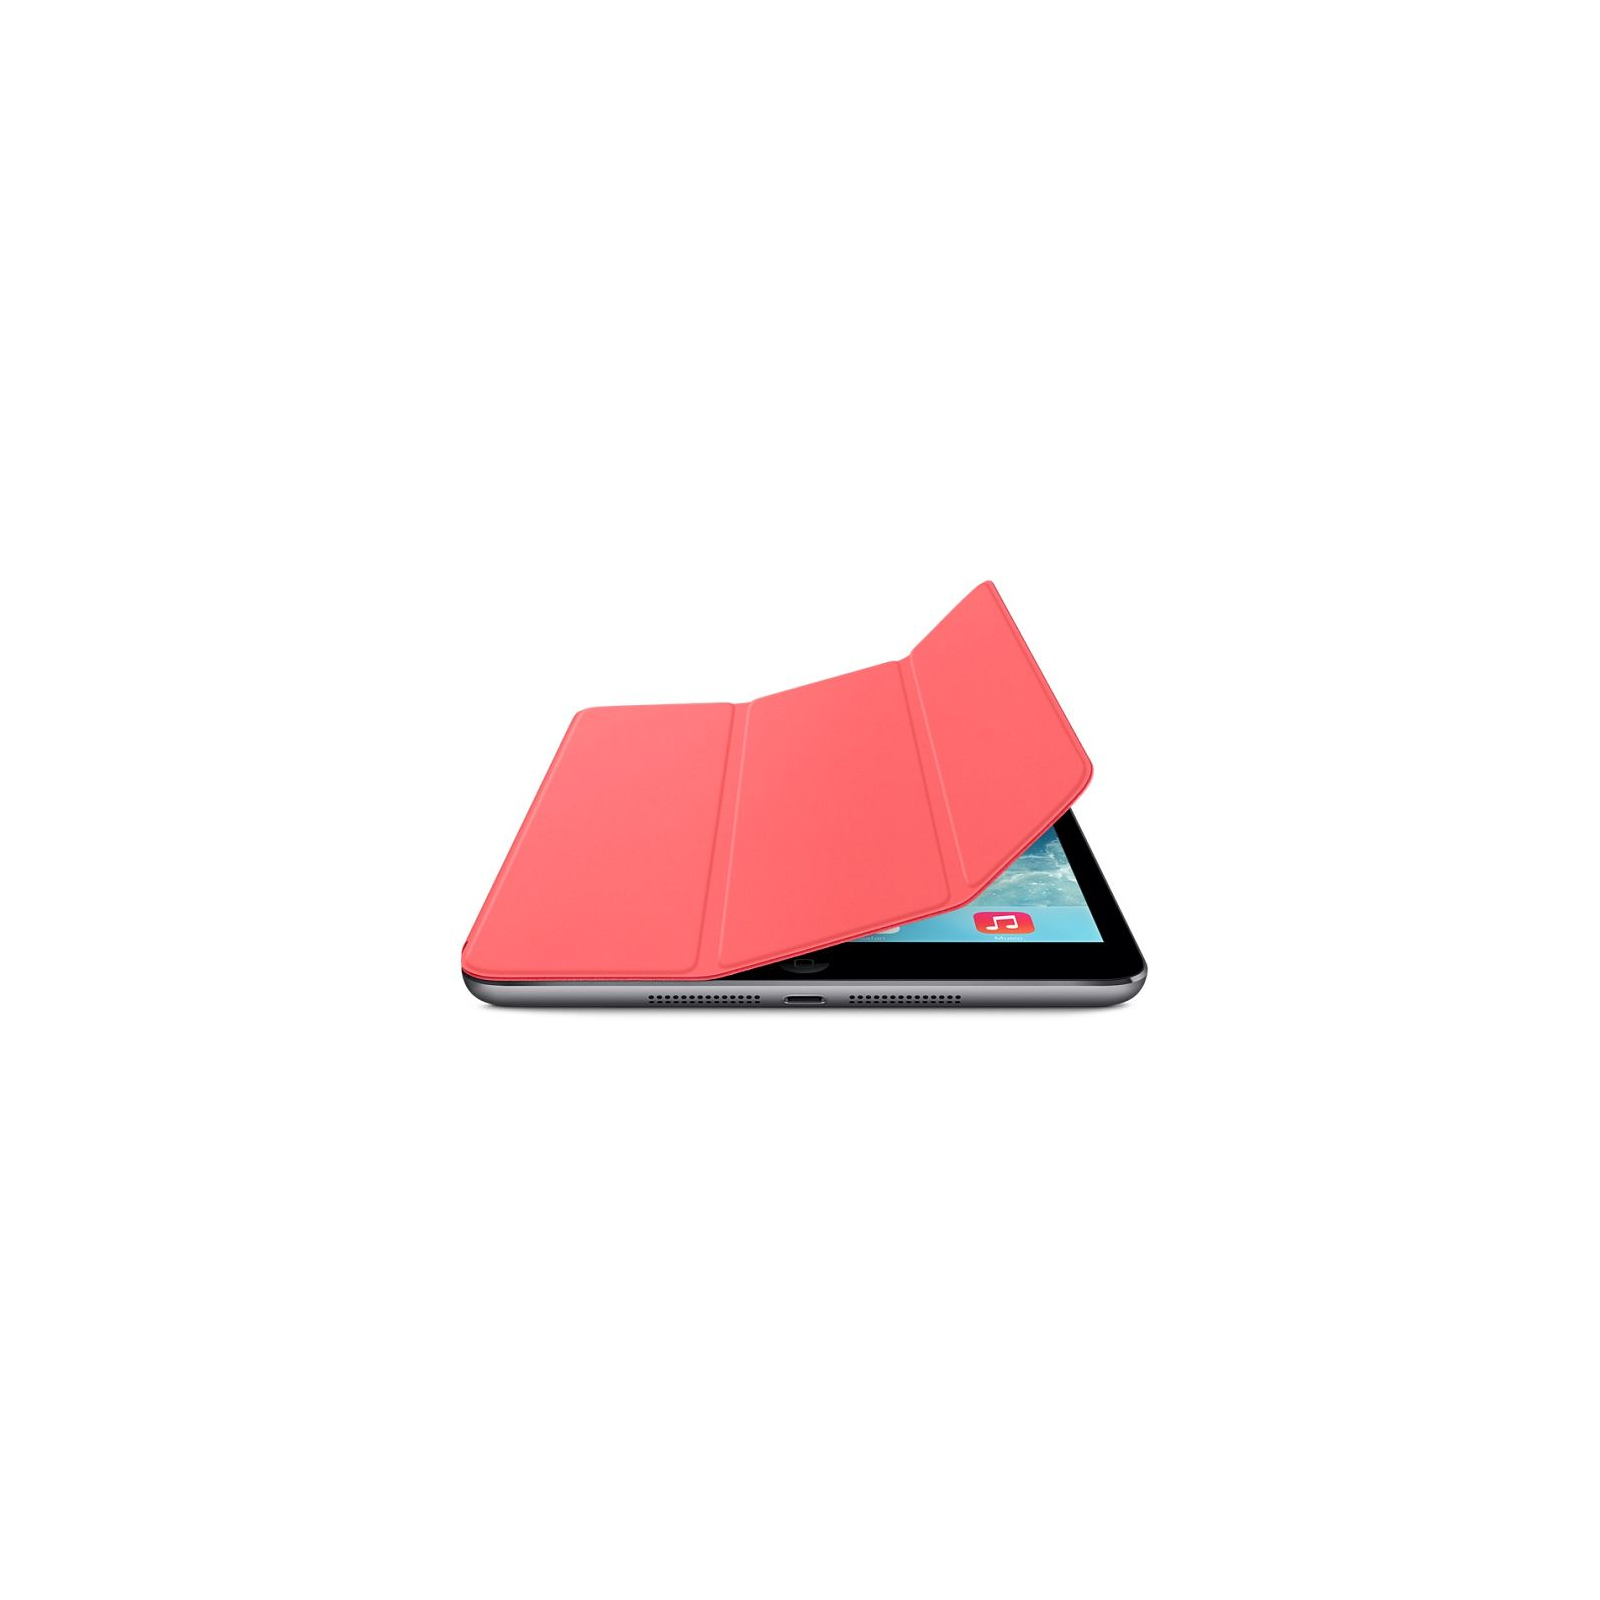 Чехол для планшета Apple Smart Cover для iPad mini /pink (MF061ZM/A) изображение 2